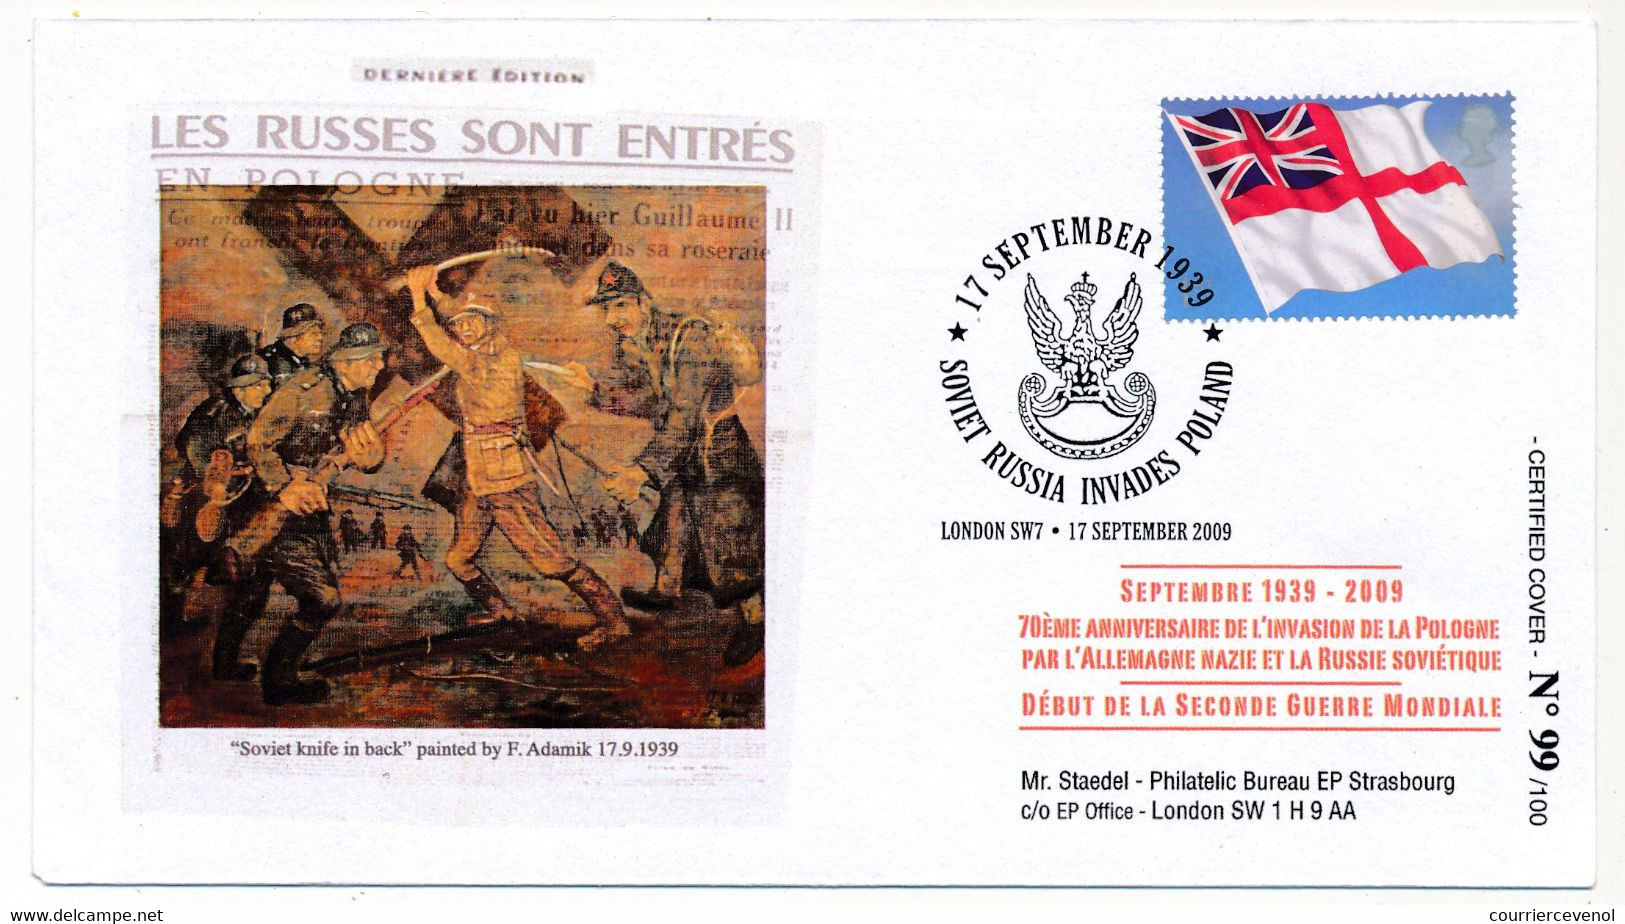 GRANDE BRETAGNE - Enveloppe Commémorative "Soviet Russia Invades Poland - 17 September 2009 - London SW7" - Guerre Mondiale (Seconde)